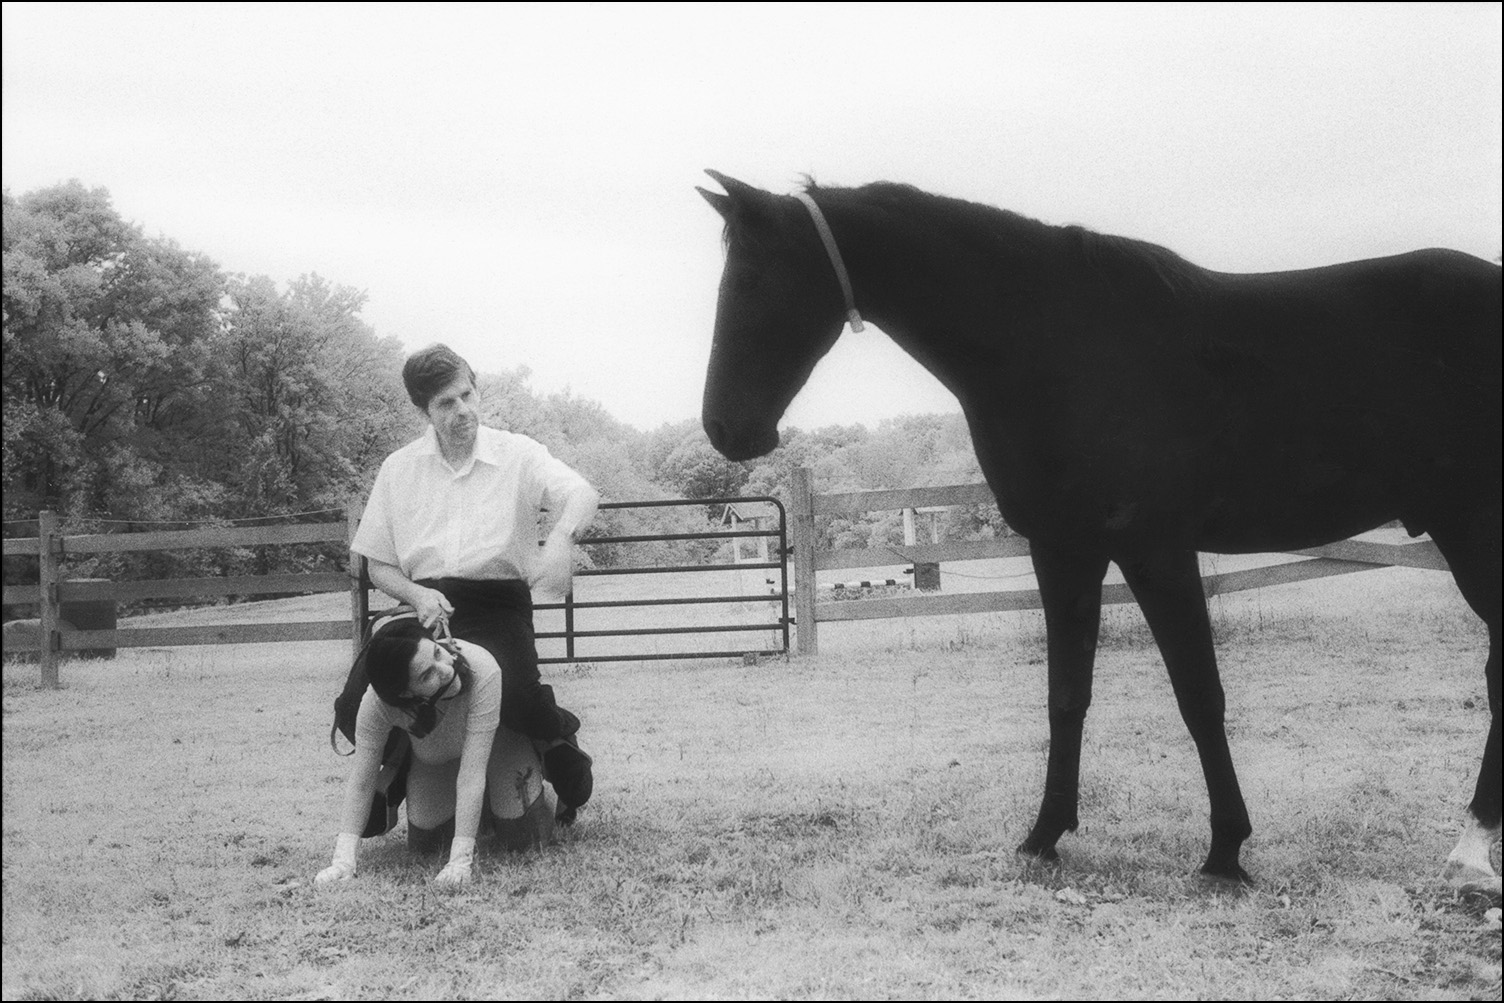   Horse Farm, 1998  